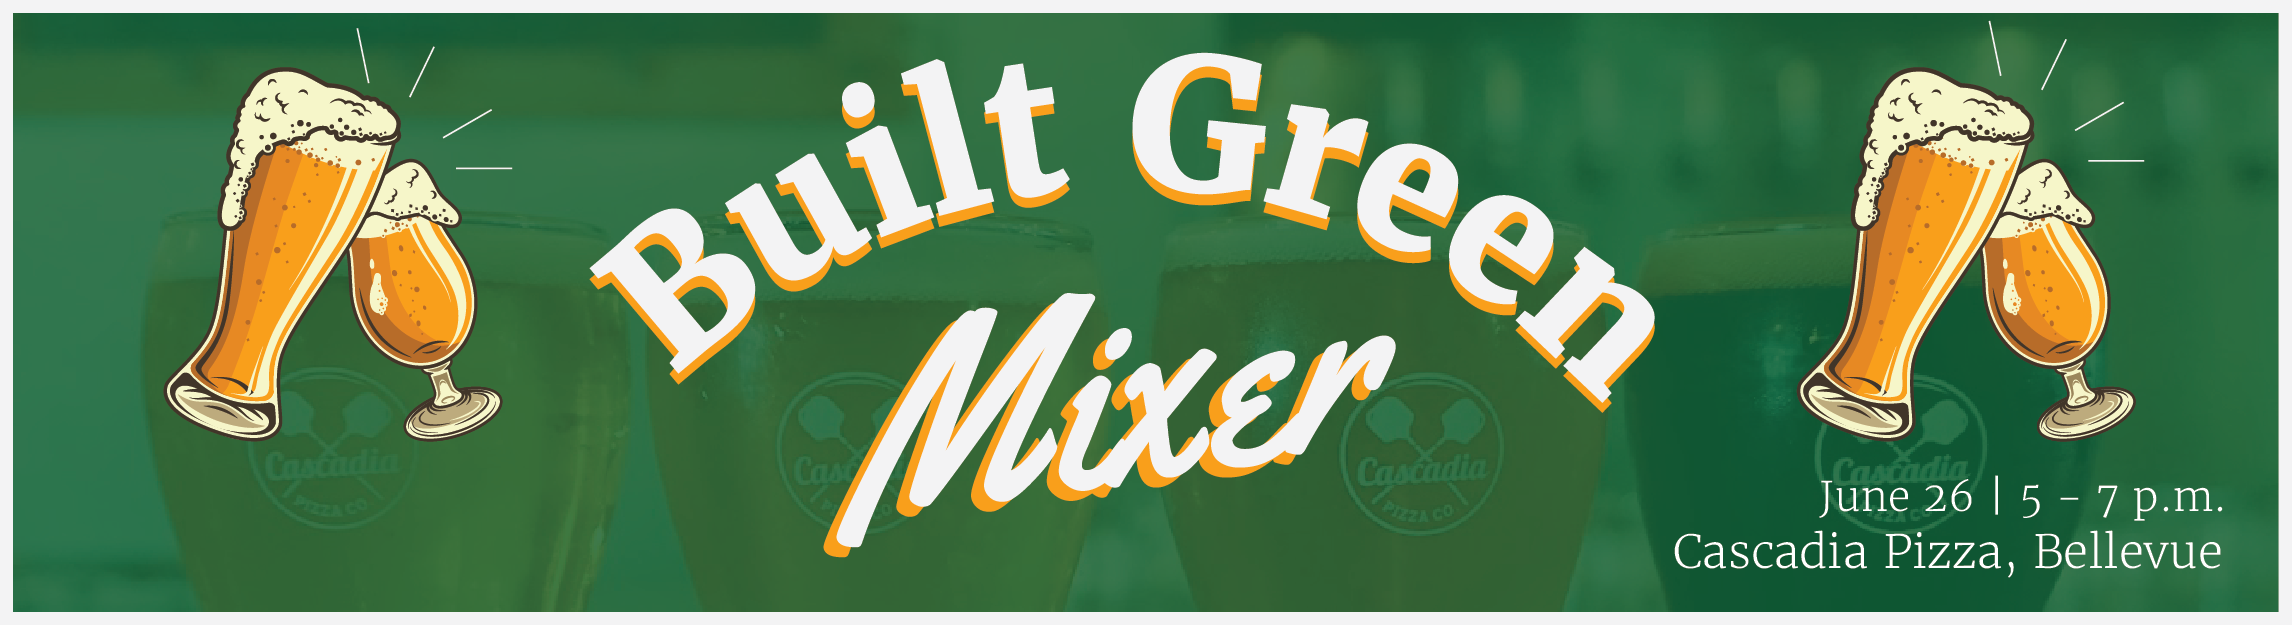 Built Green Mixer